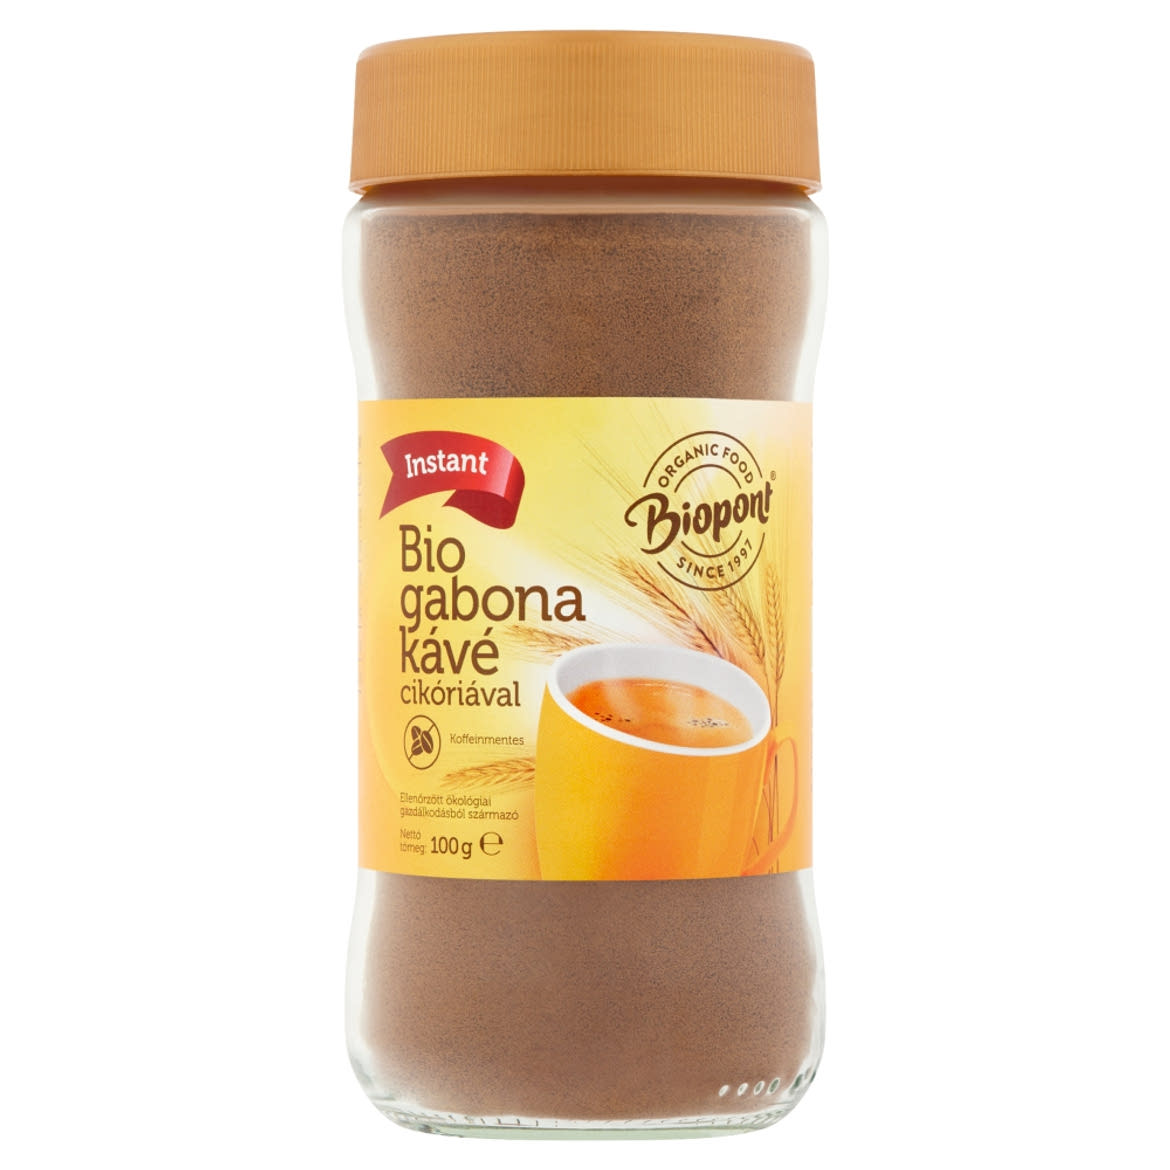 Biopont BIO koffeinmentes gabona kávé cikóriával